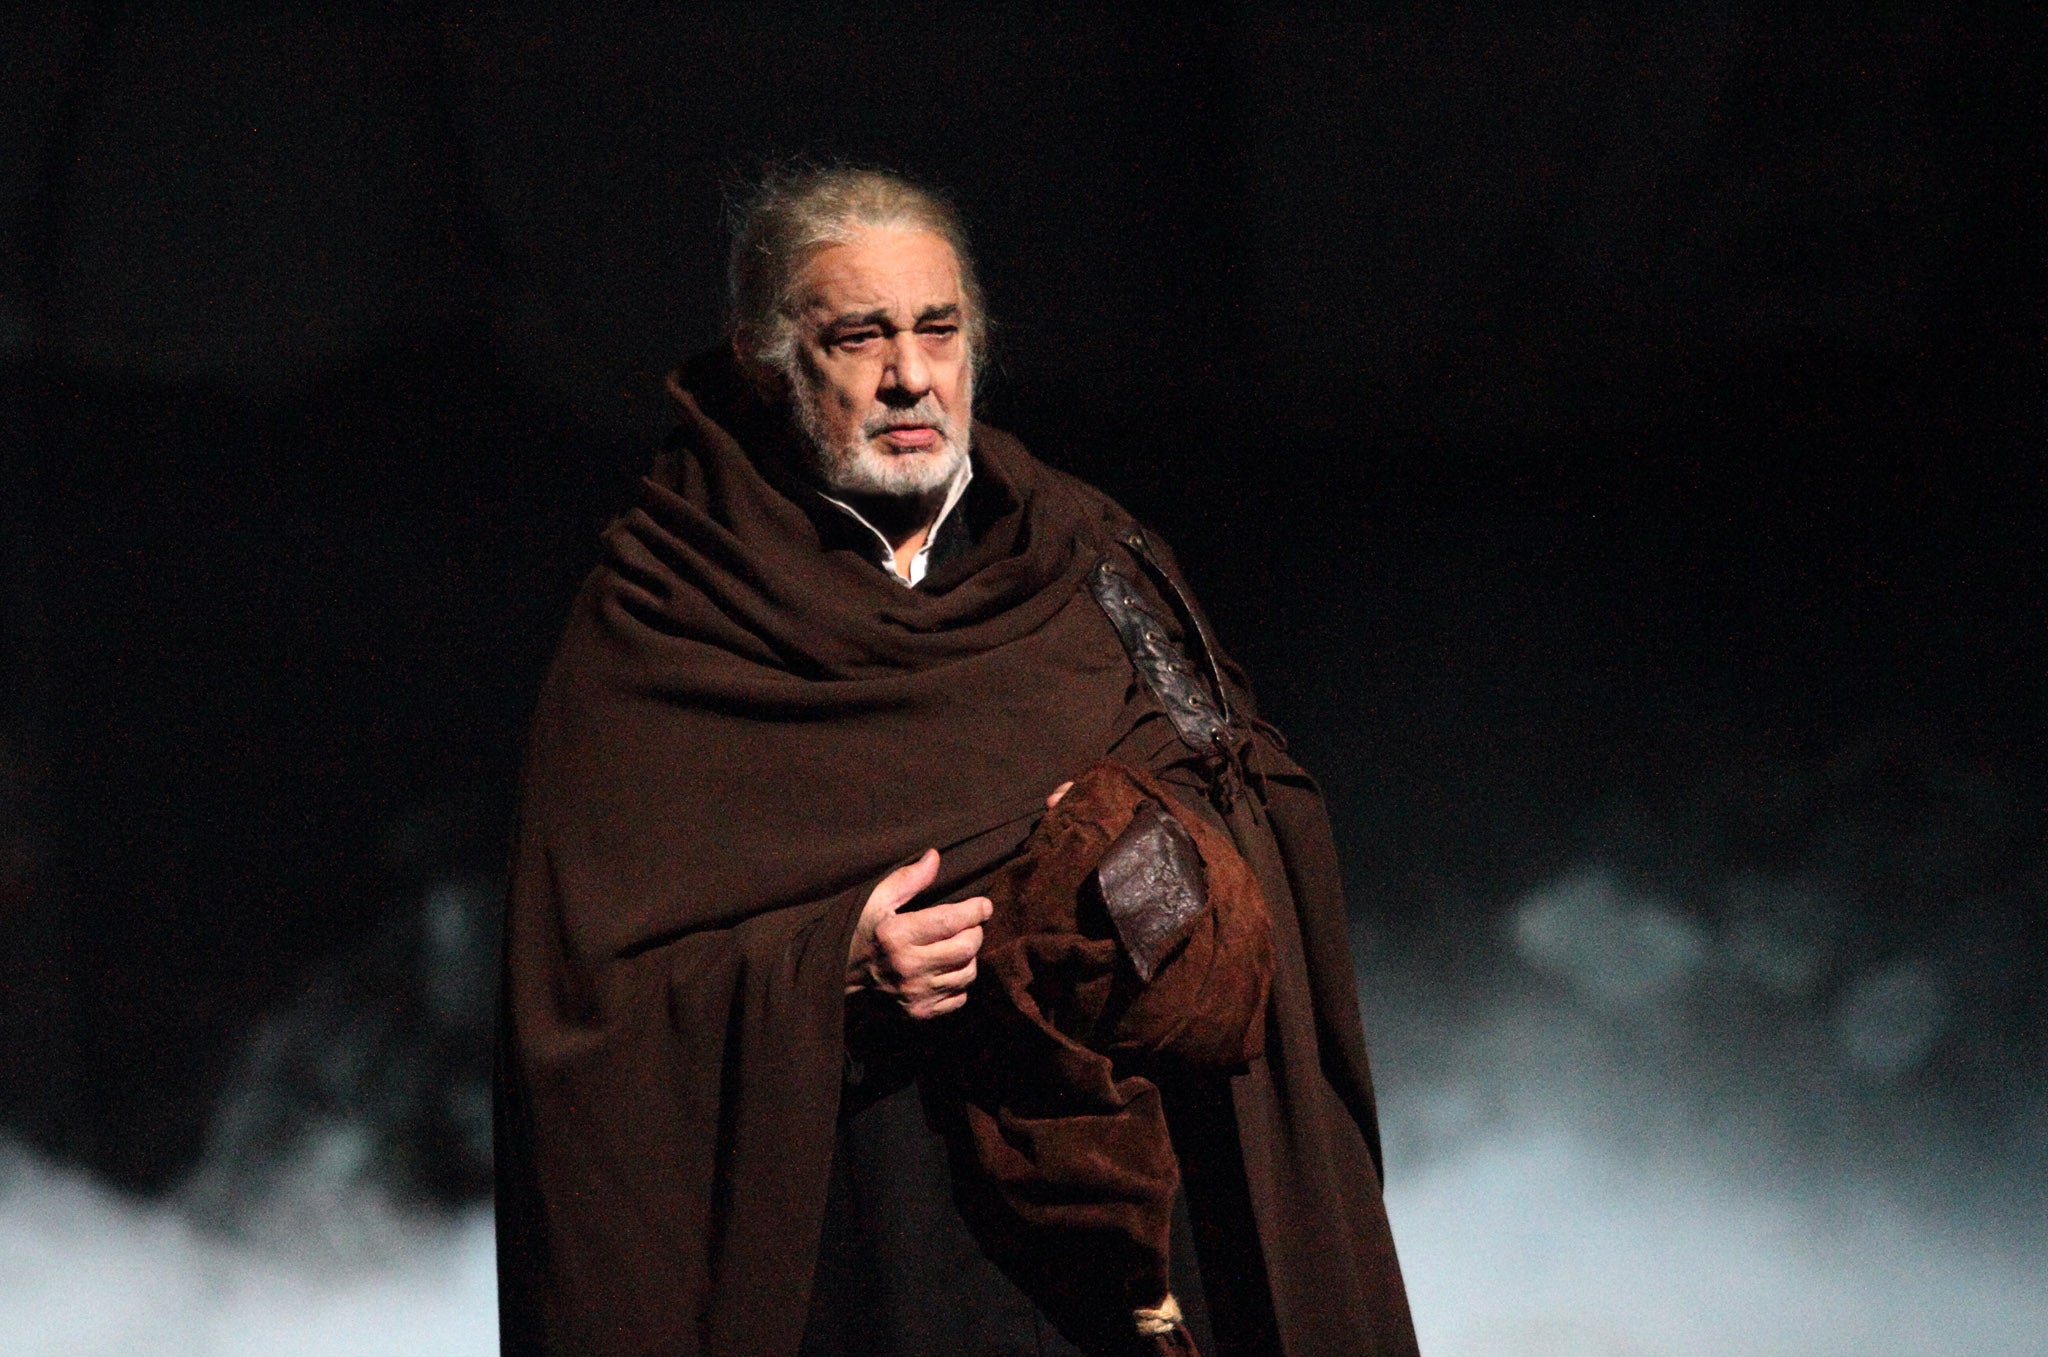 Placido Domingo plays Francesco Foscari